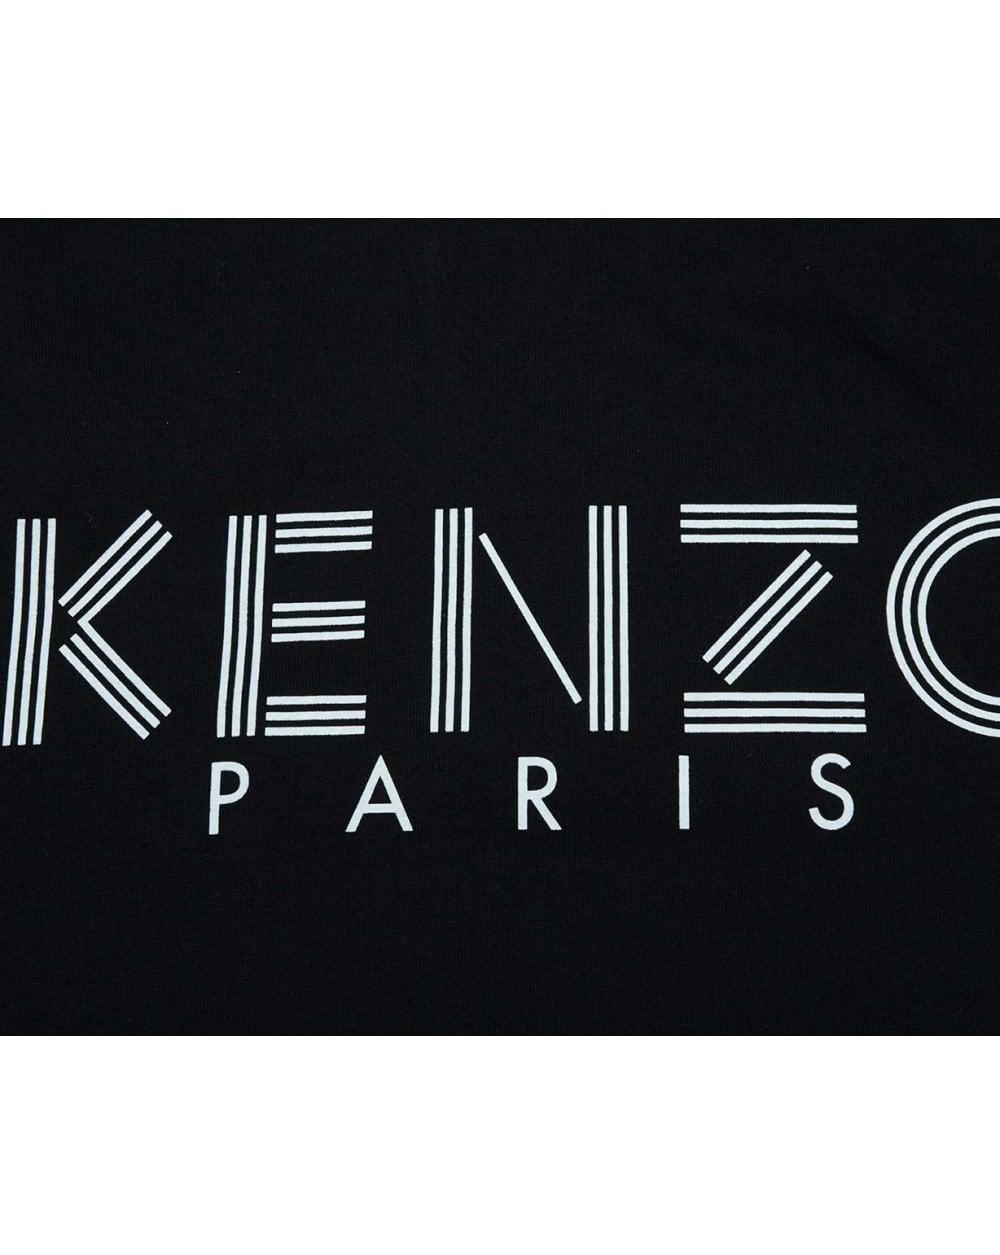 Kenzo Paris Logo - Mens Kenzo Paris Logo Crew Neck T Shirt